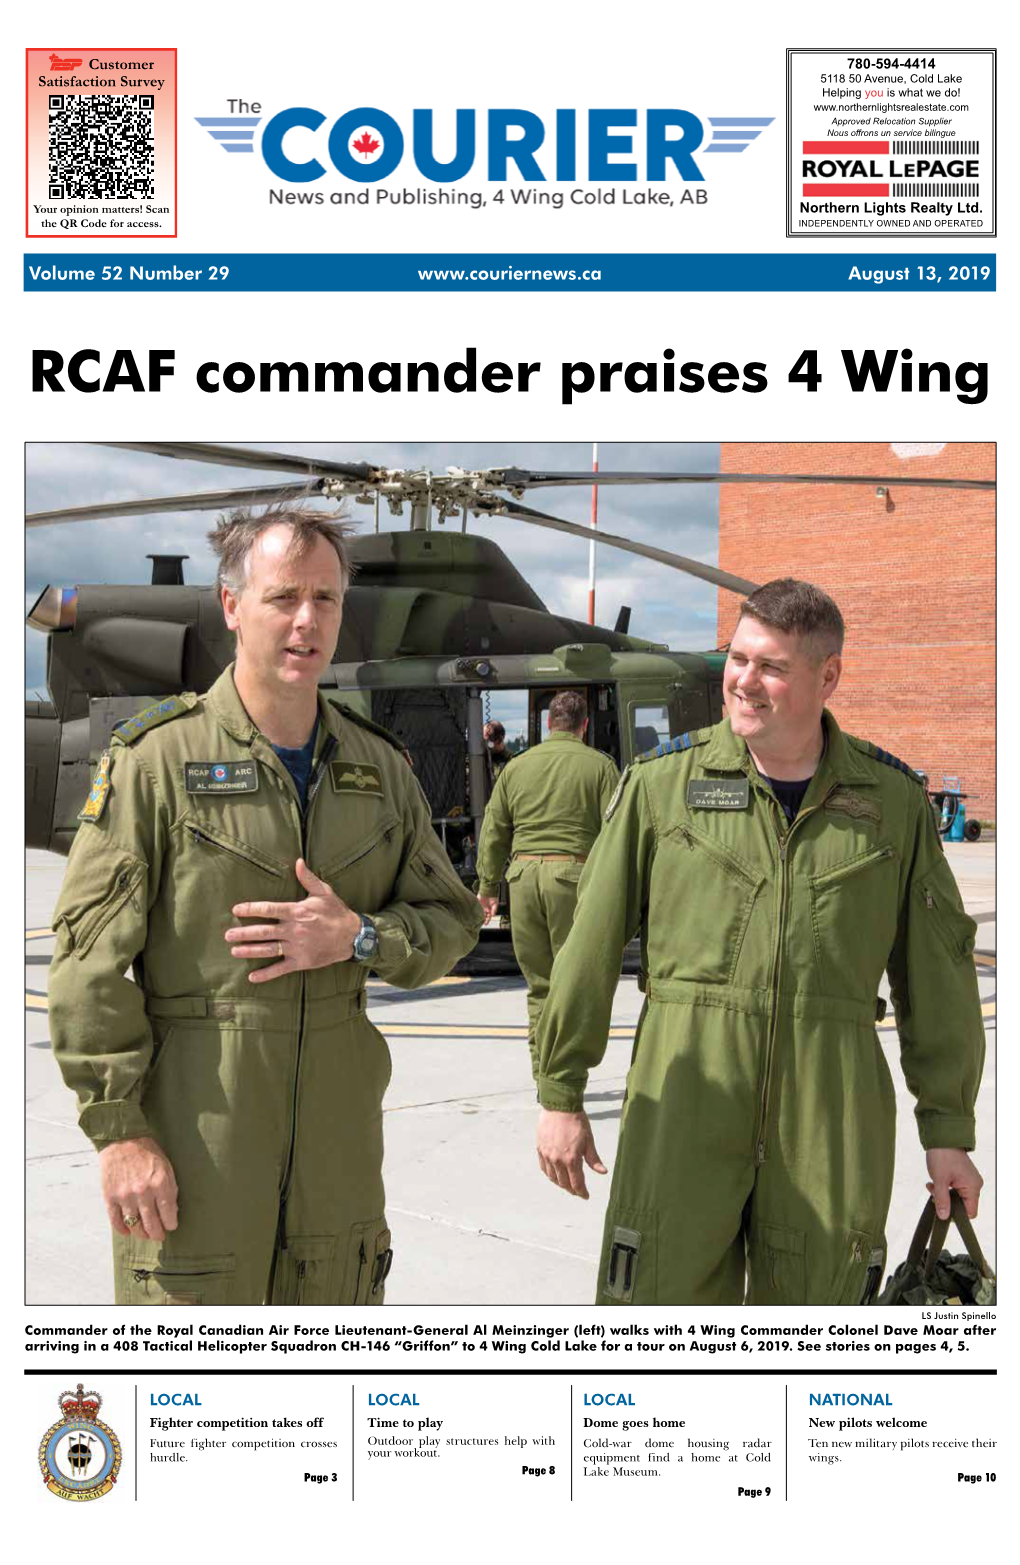 RCAF Commander Praises 4 Wing